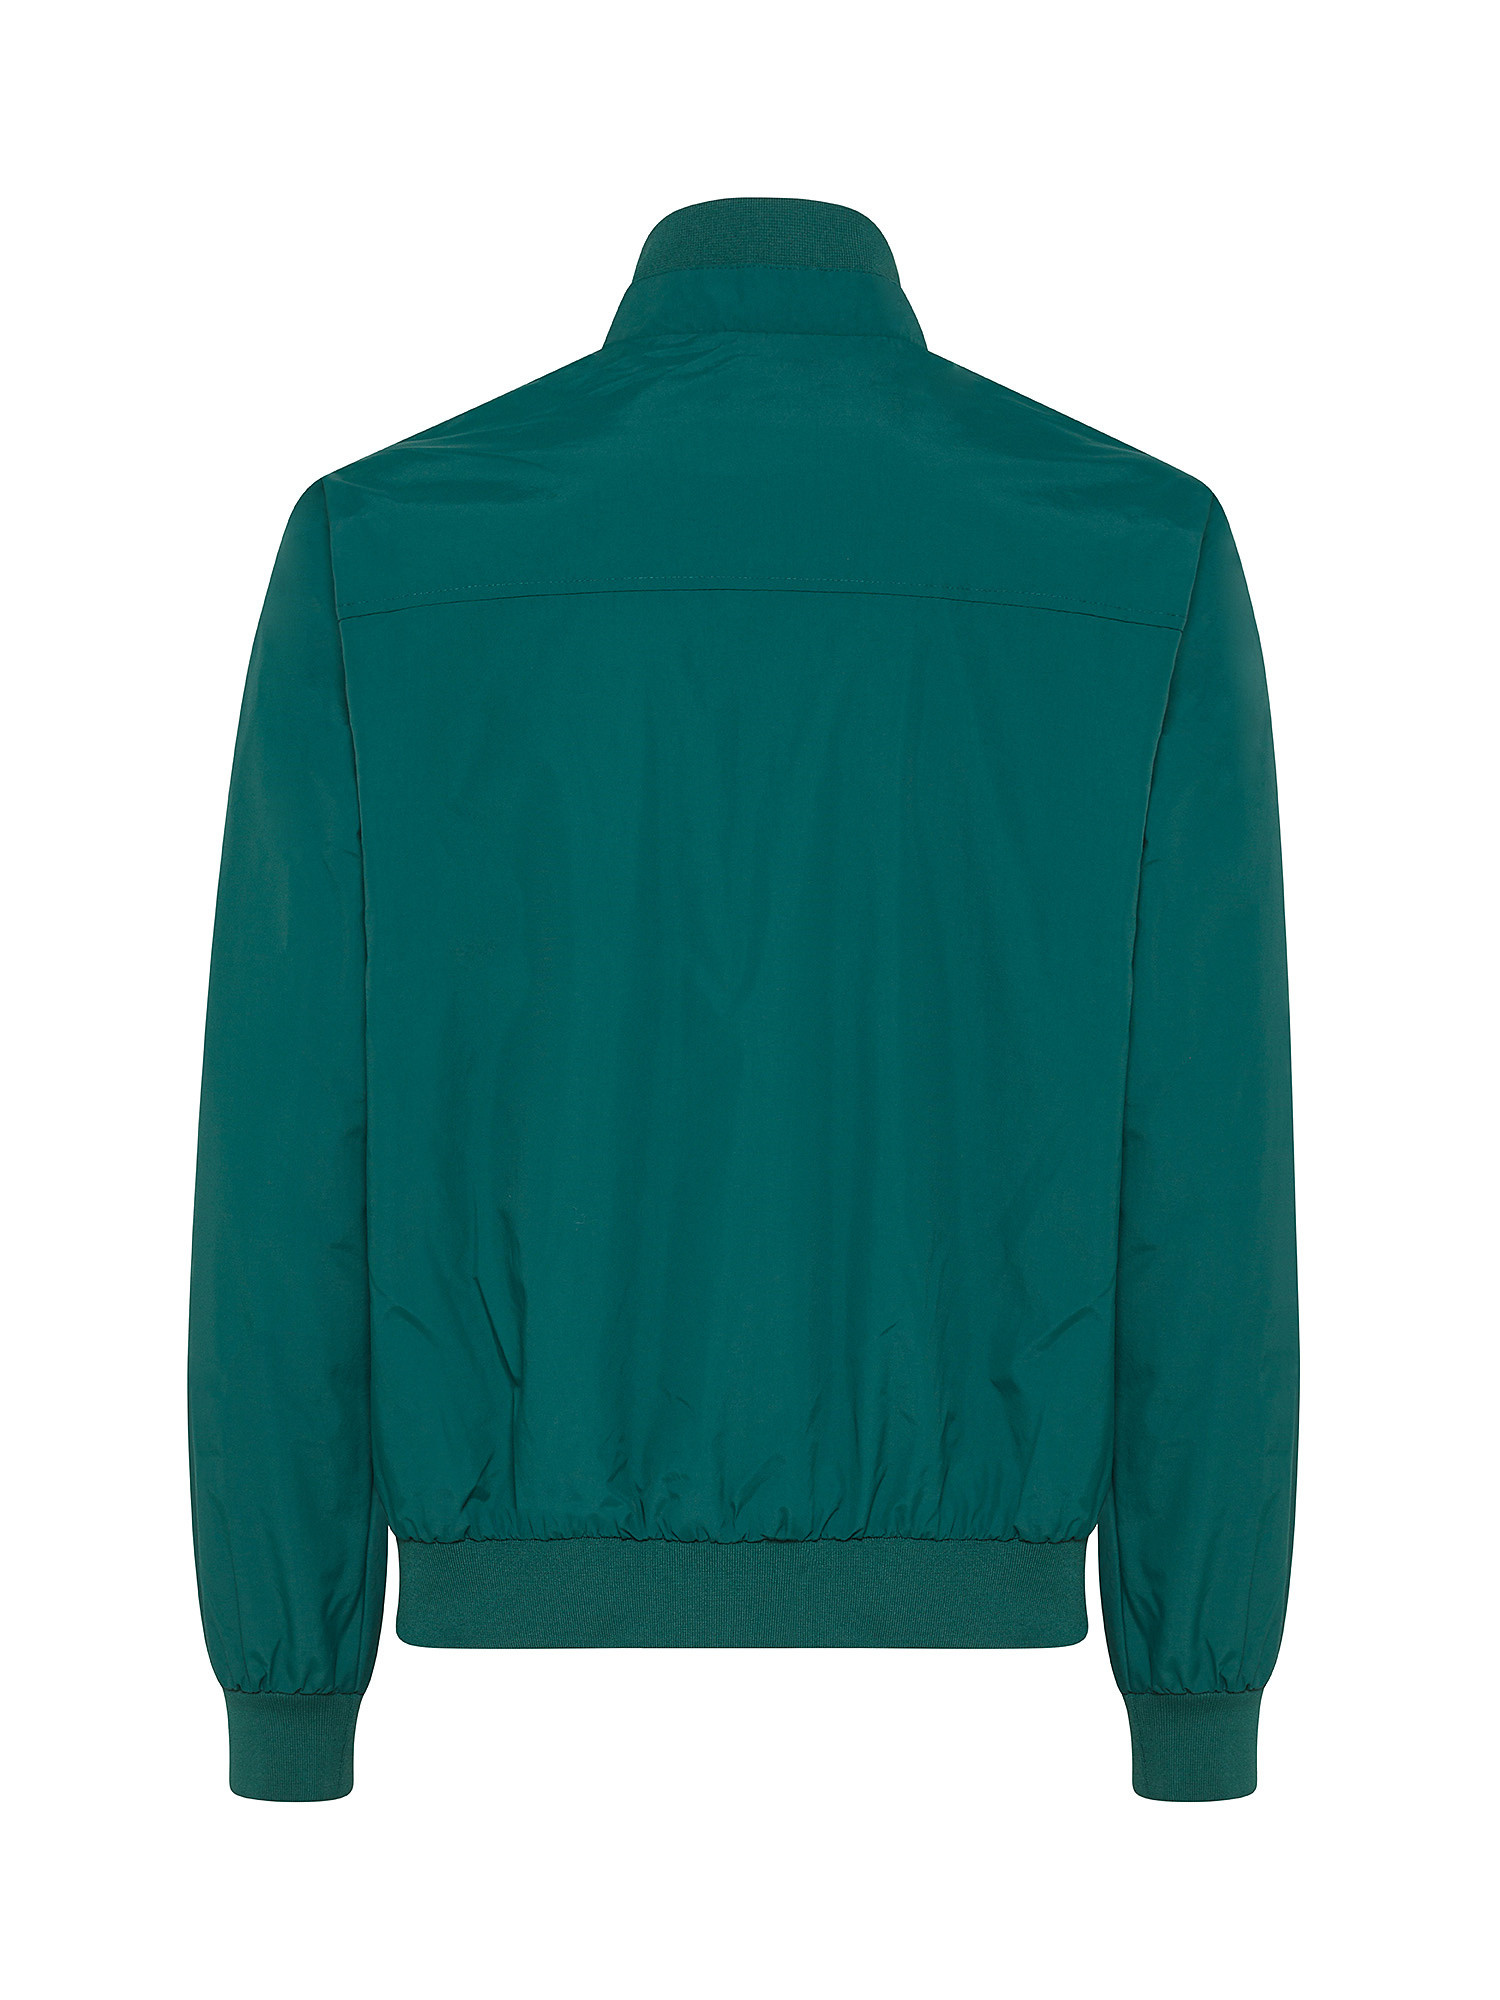 JCT - Full zip jacket, Green, large image number 1